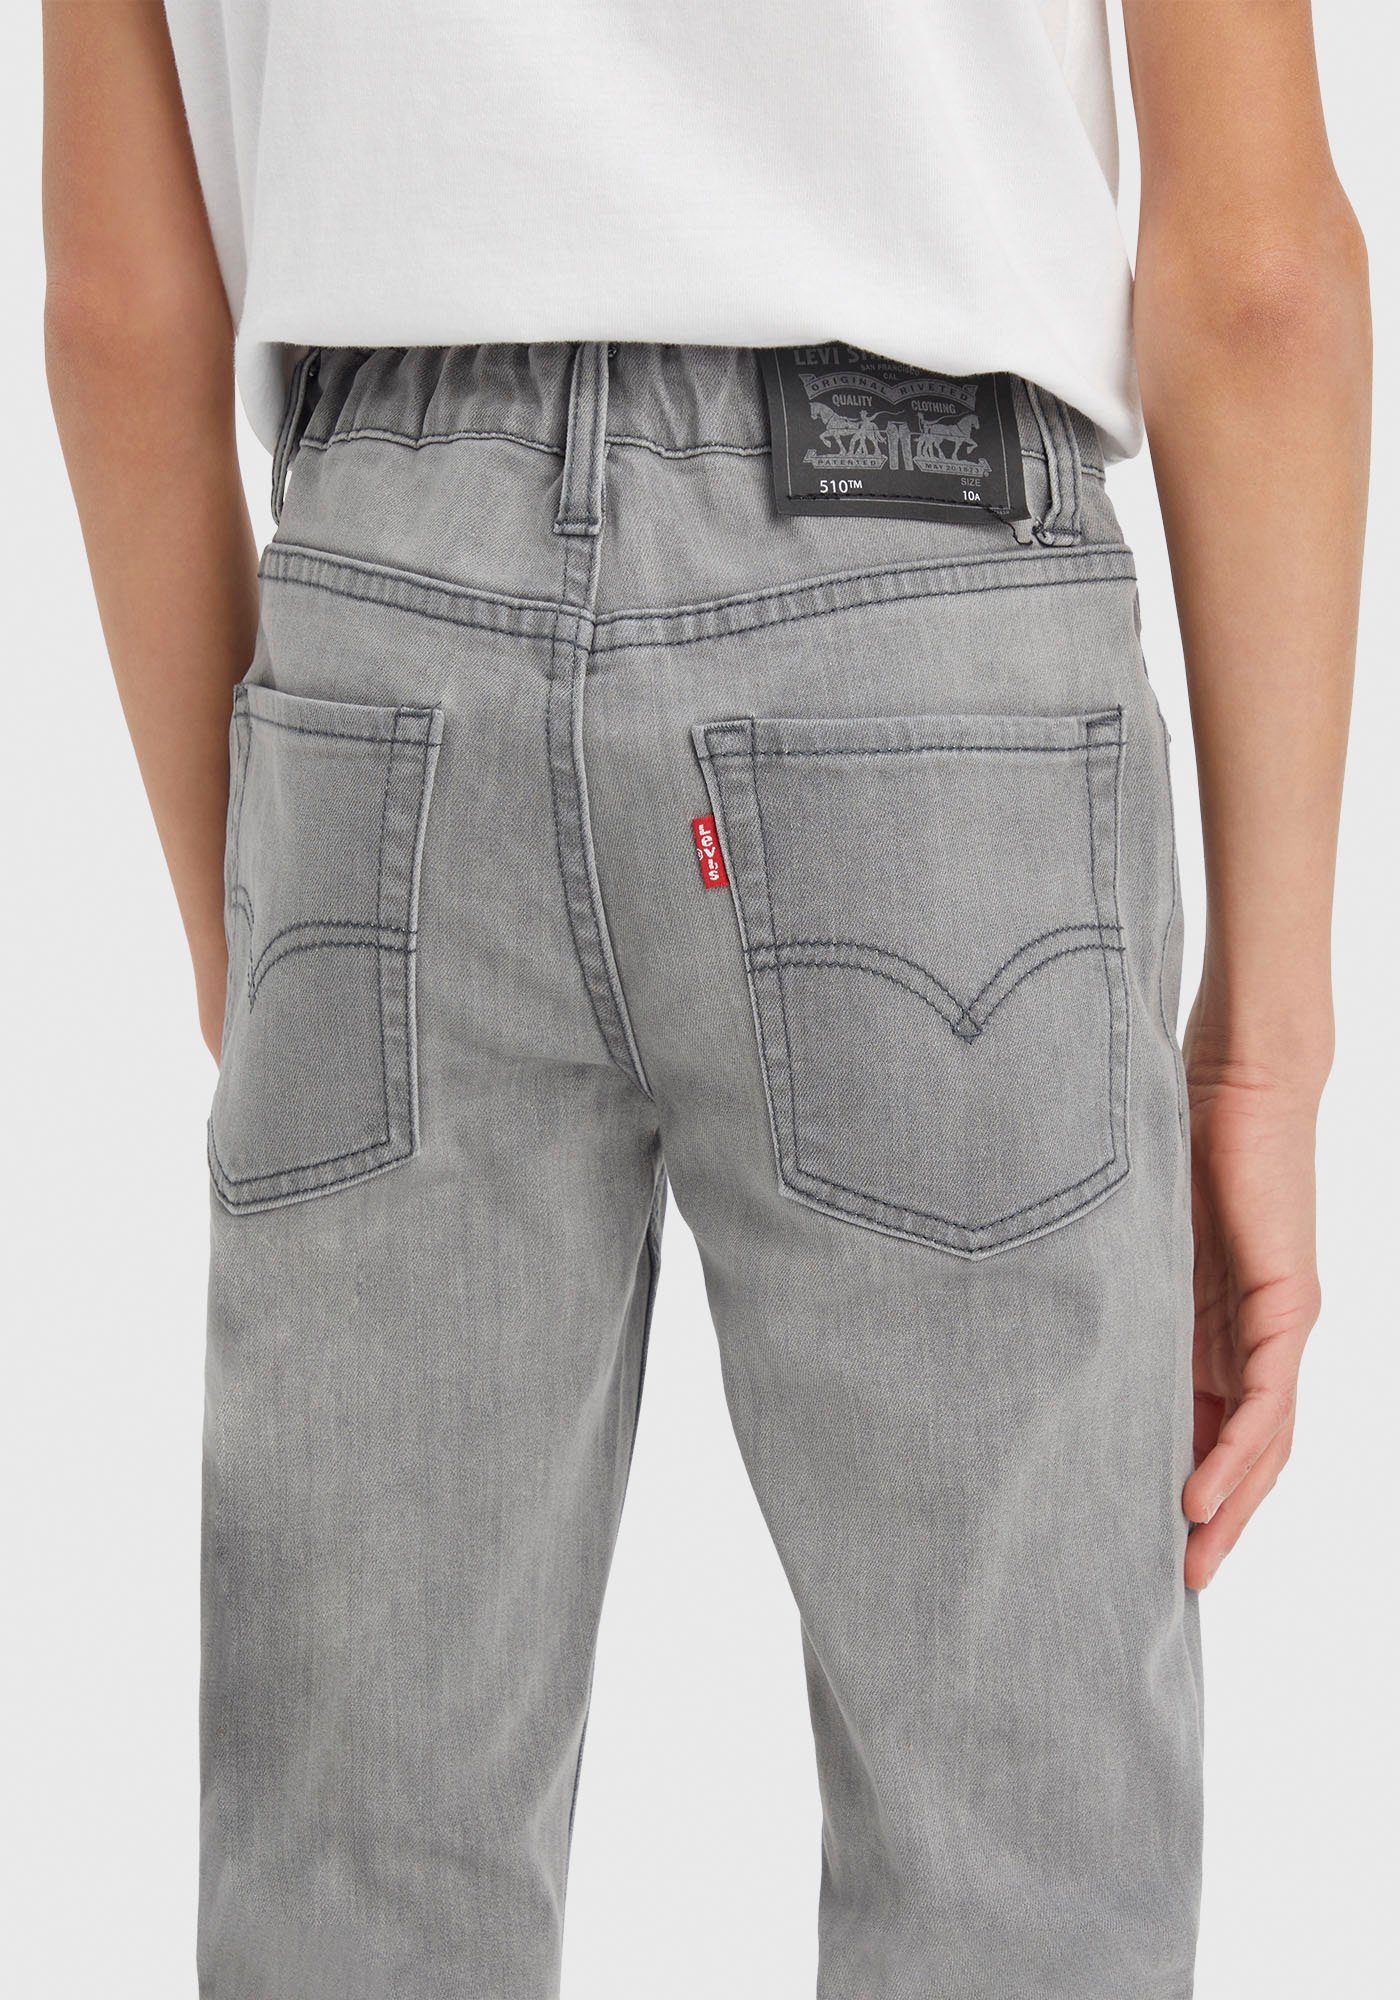 JEANS Levi's® BOYS grey 510 Skinny-fit-Jeans bett for is SKINNY FIT Kids